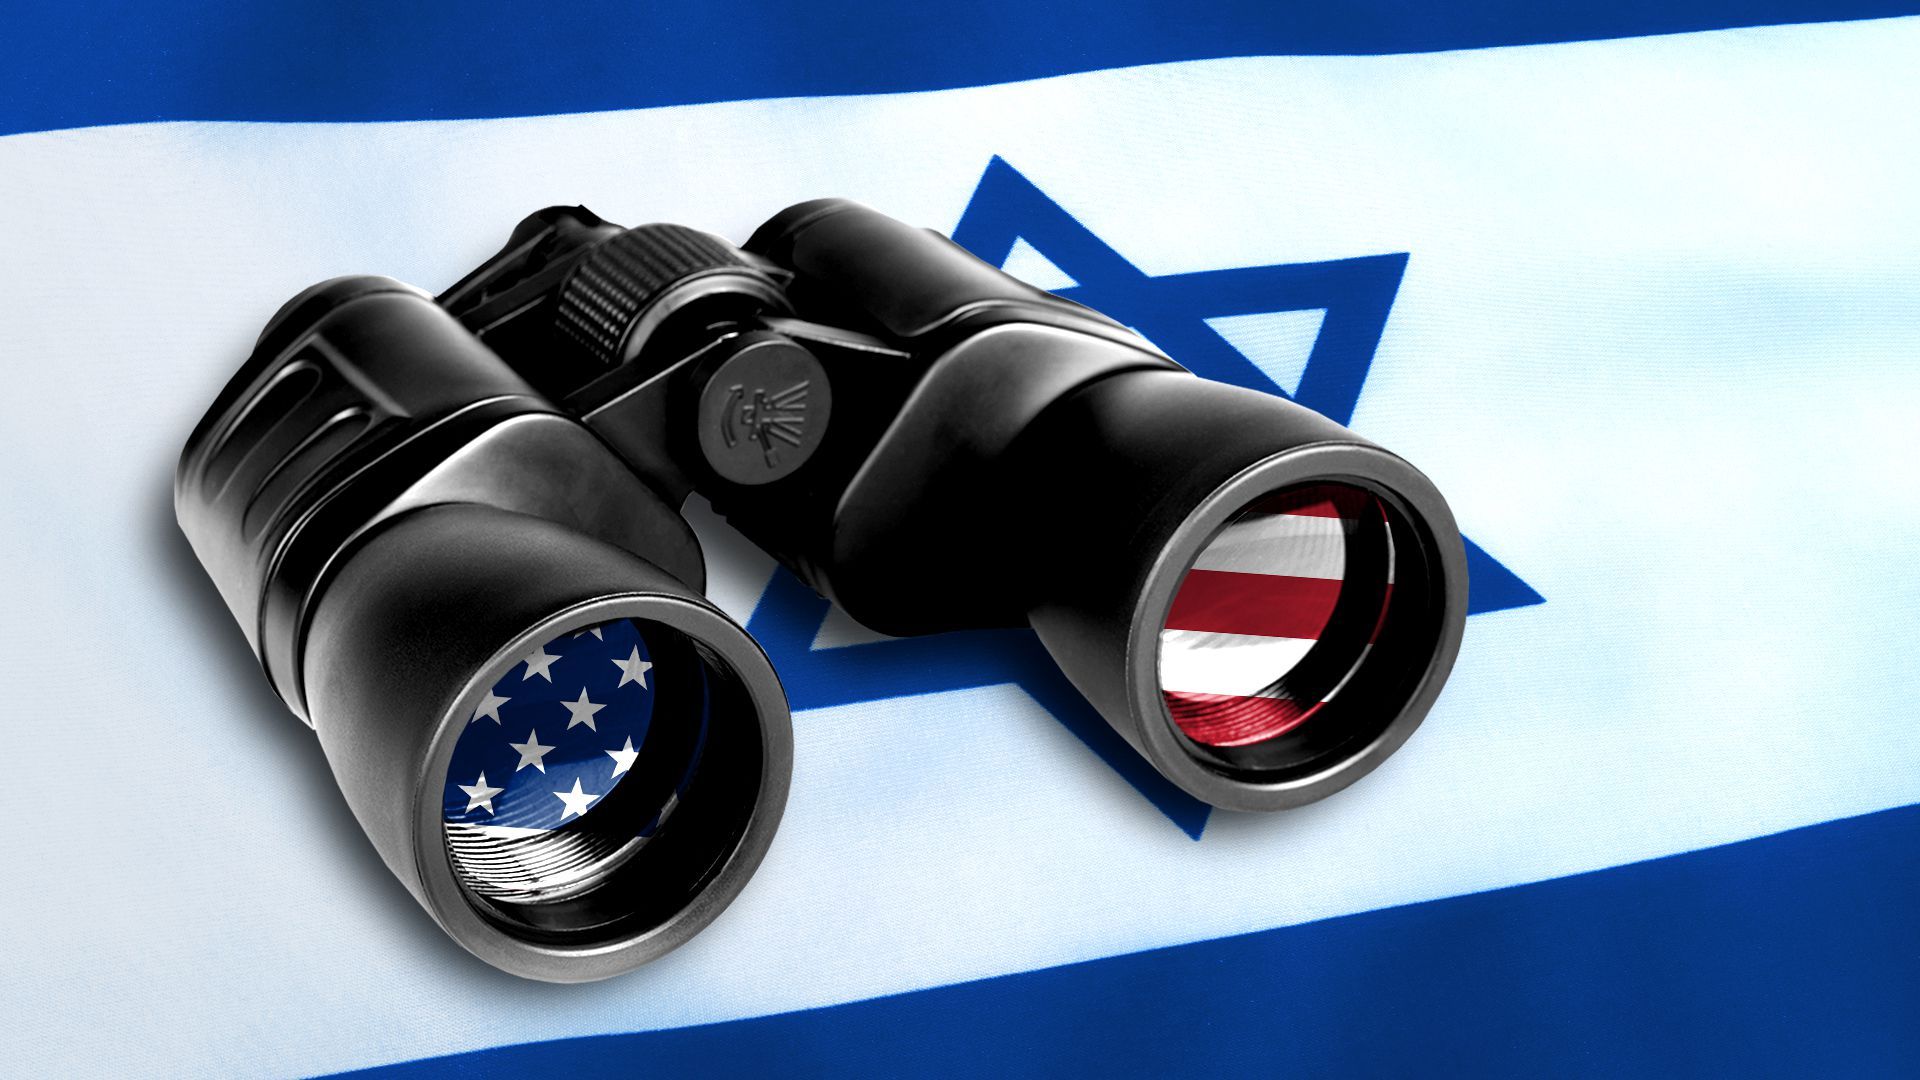 Illustration of binoculars resting on the Israel flag, reflecting the U.S. flag in the lenses